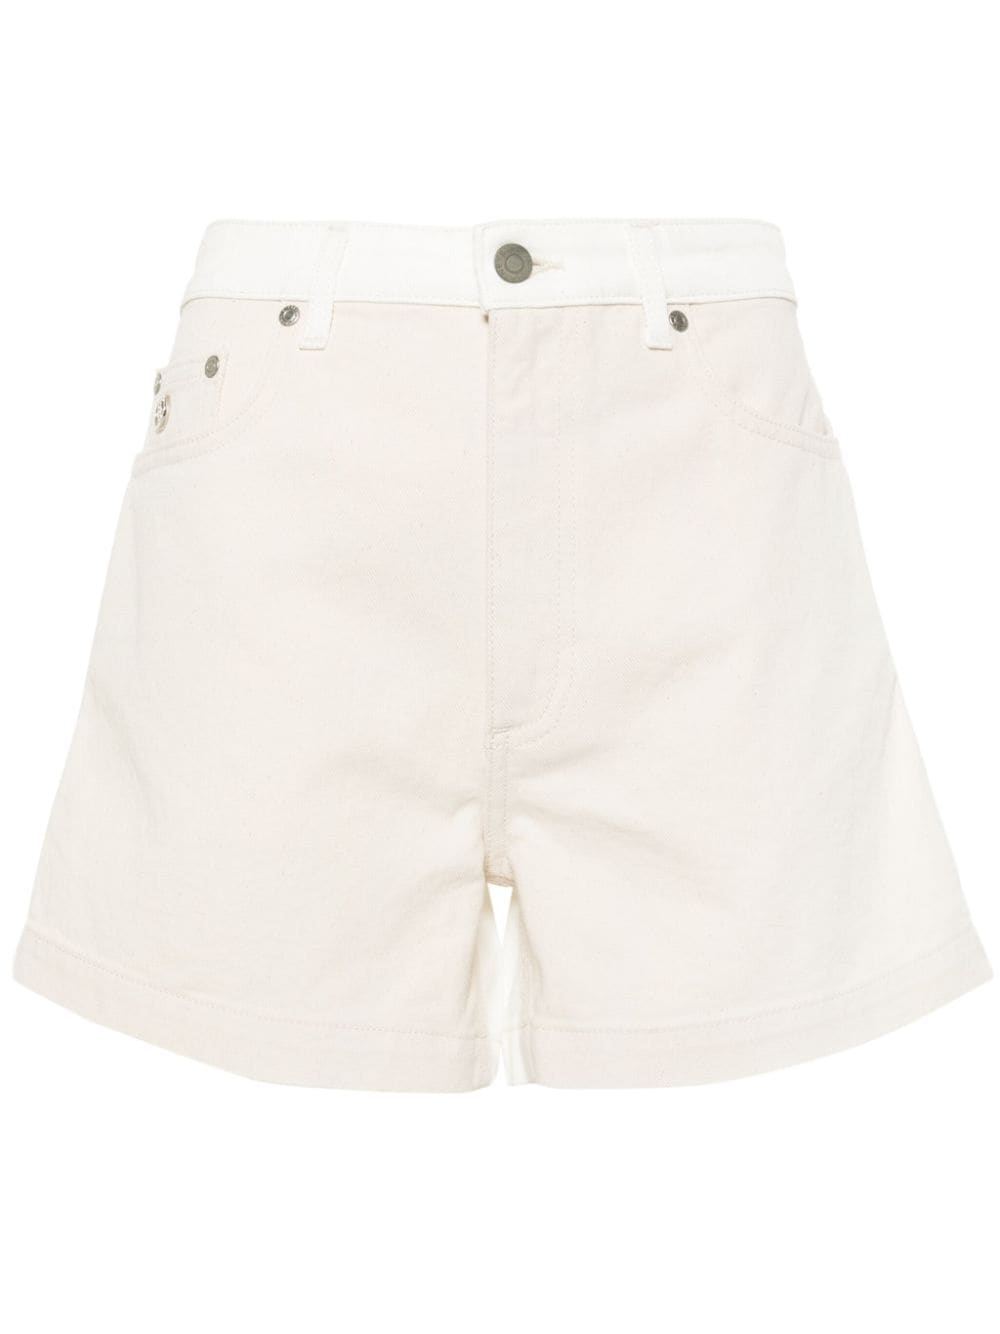 two-tone denim shorts<BR/><BR/><BR/>